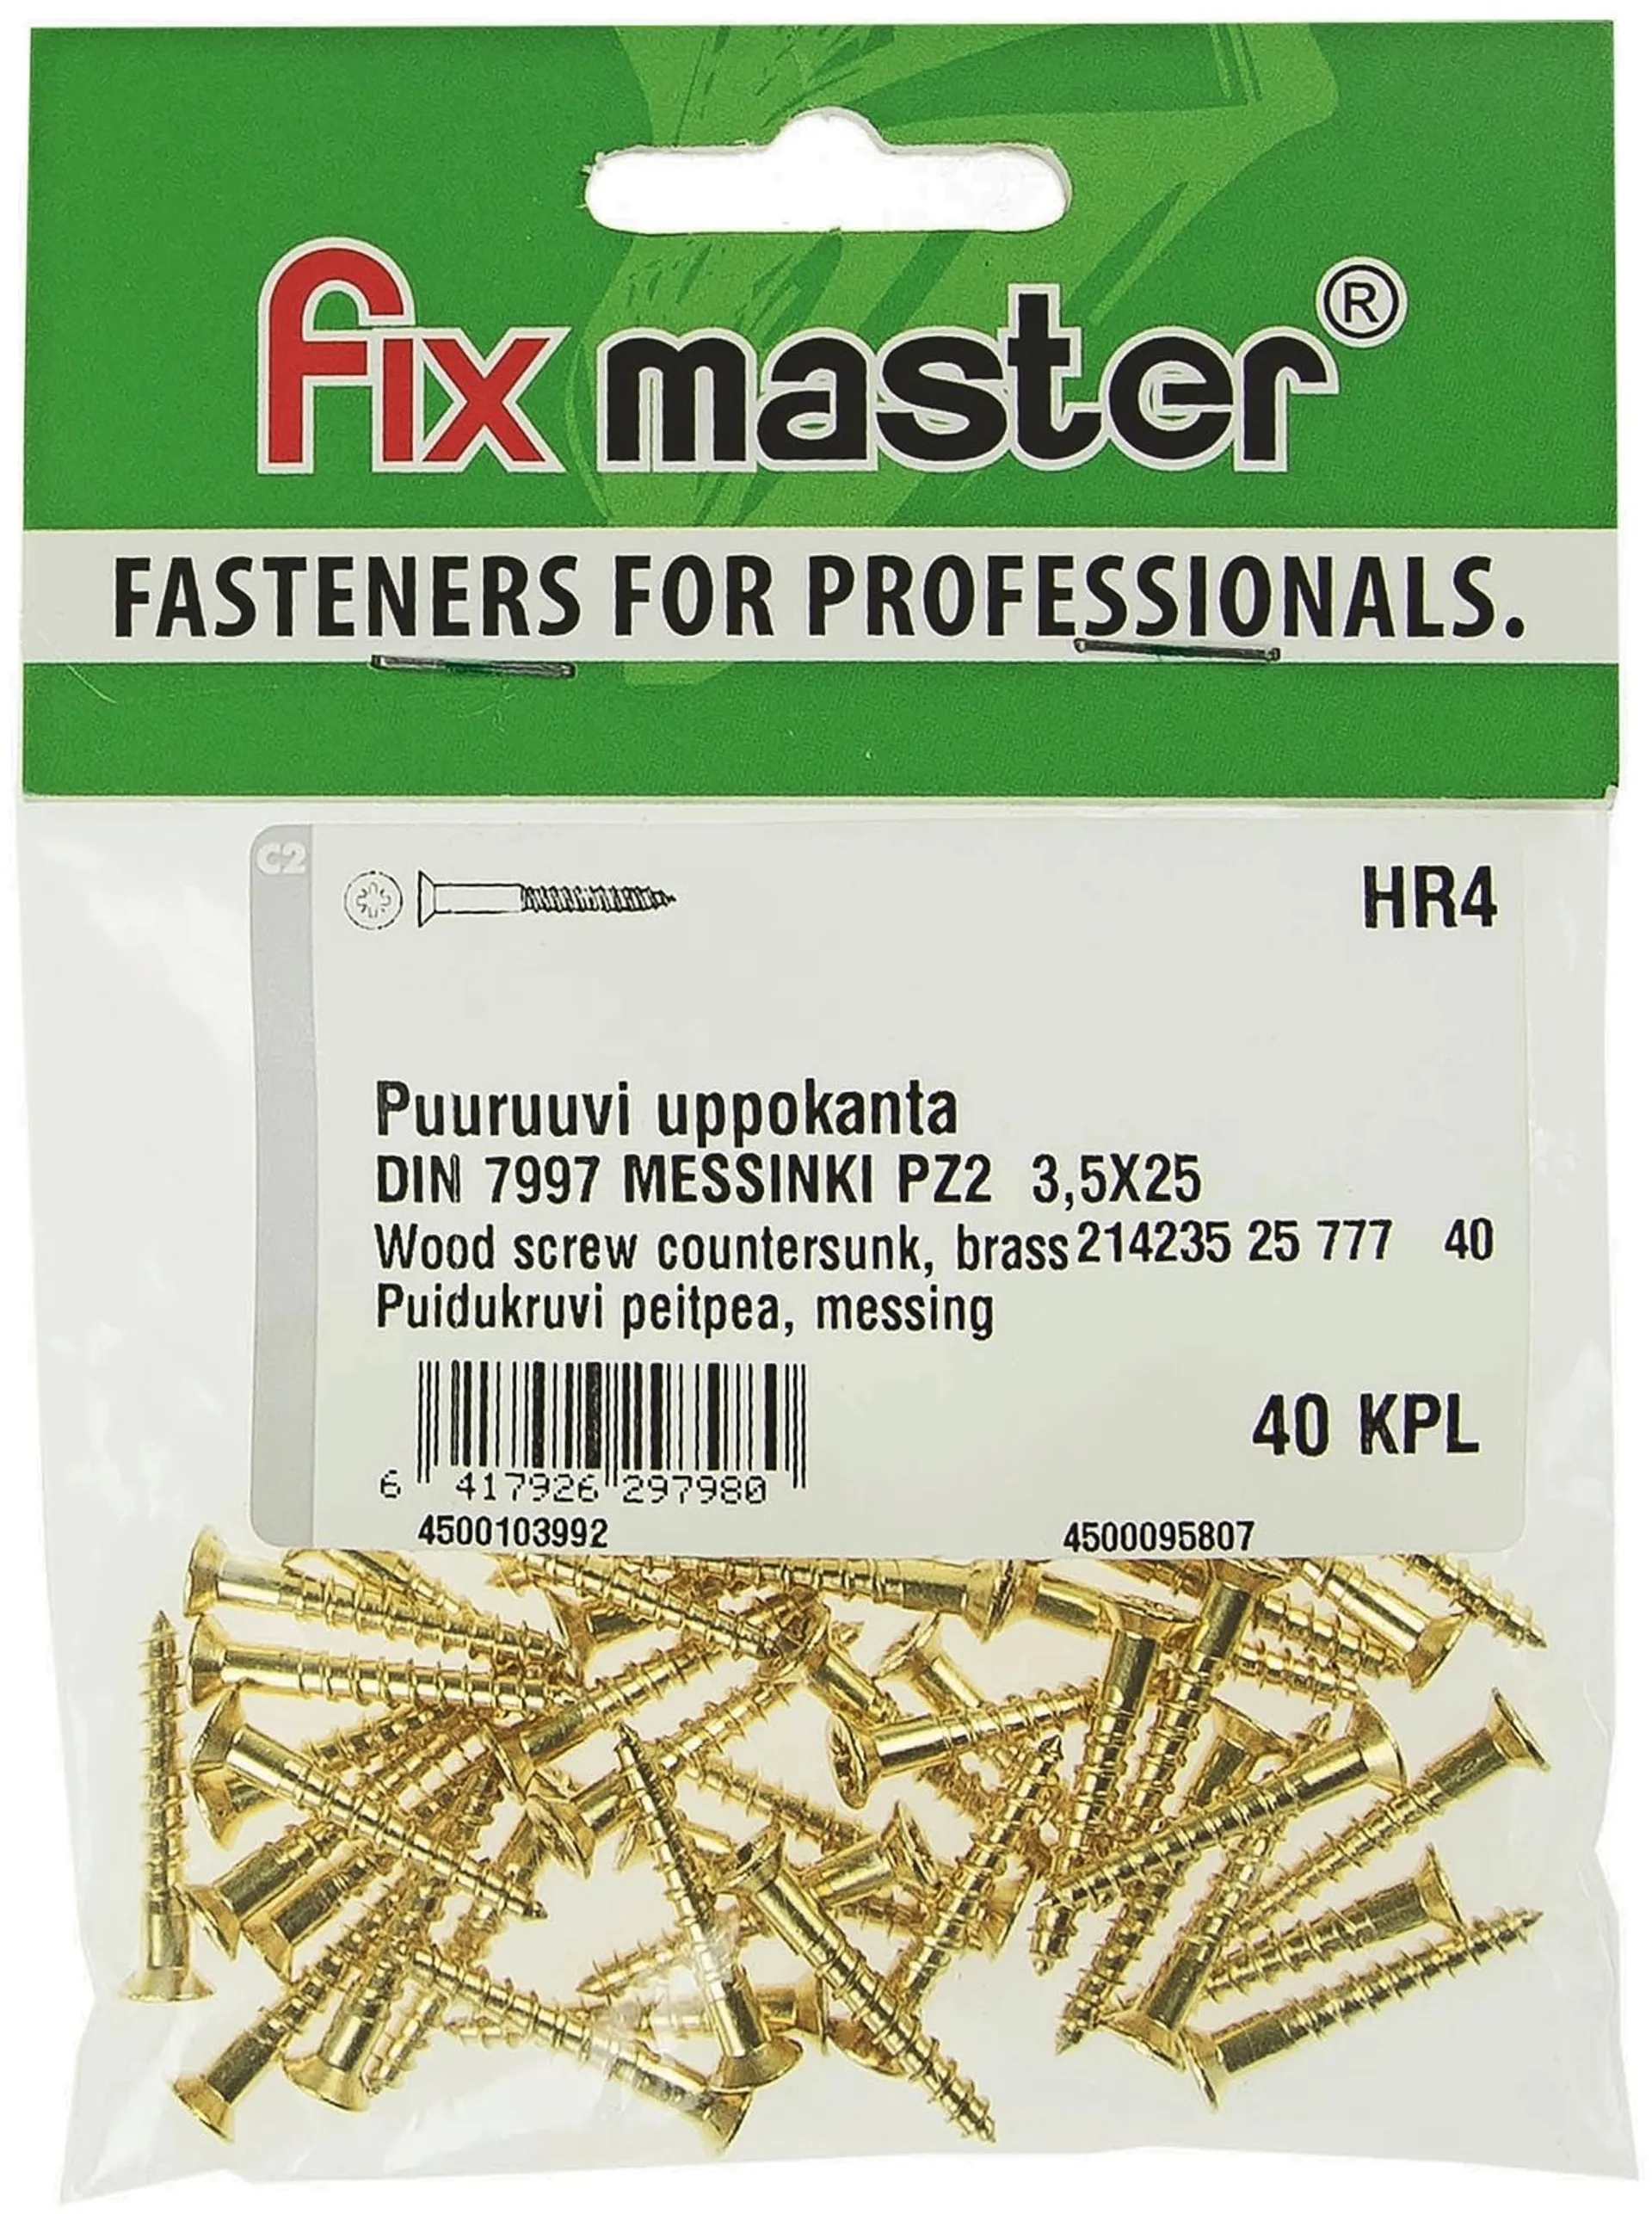 Fix Master puuruuvi uppokanta messinki PZ2 3,5X25 40kpl